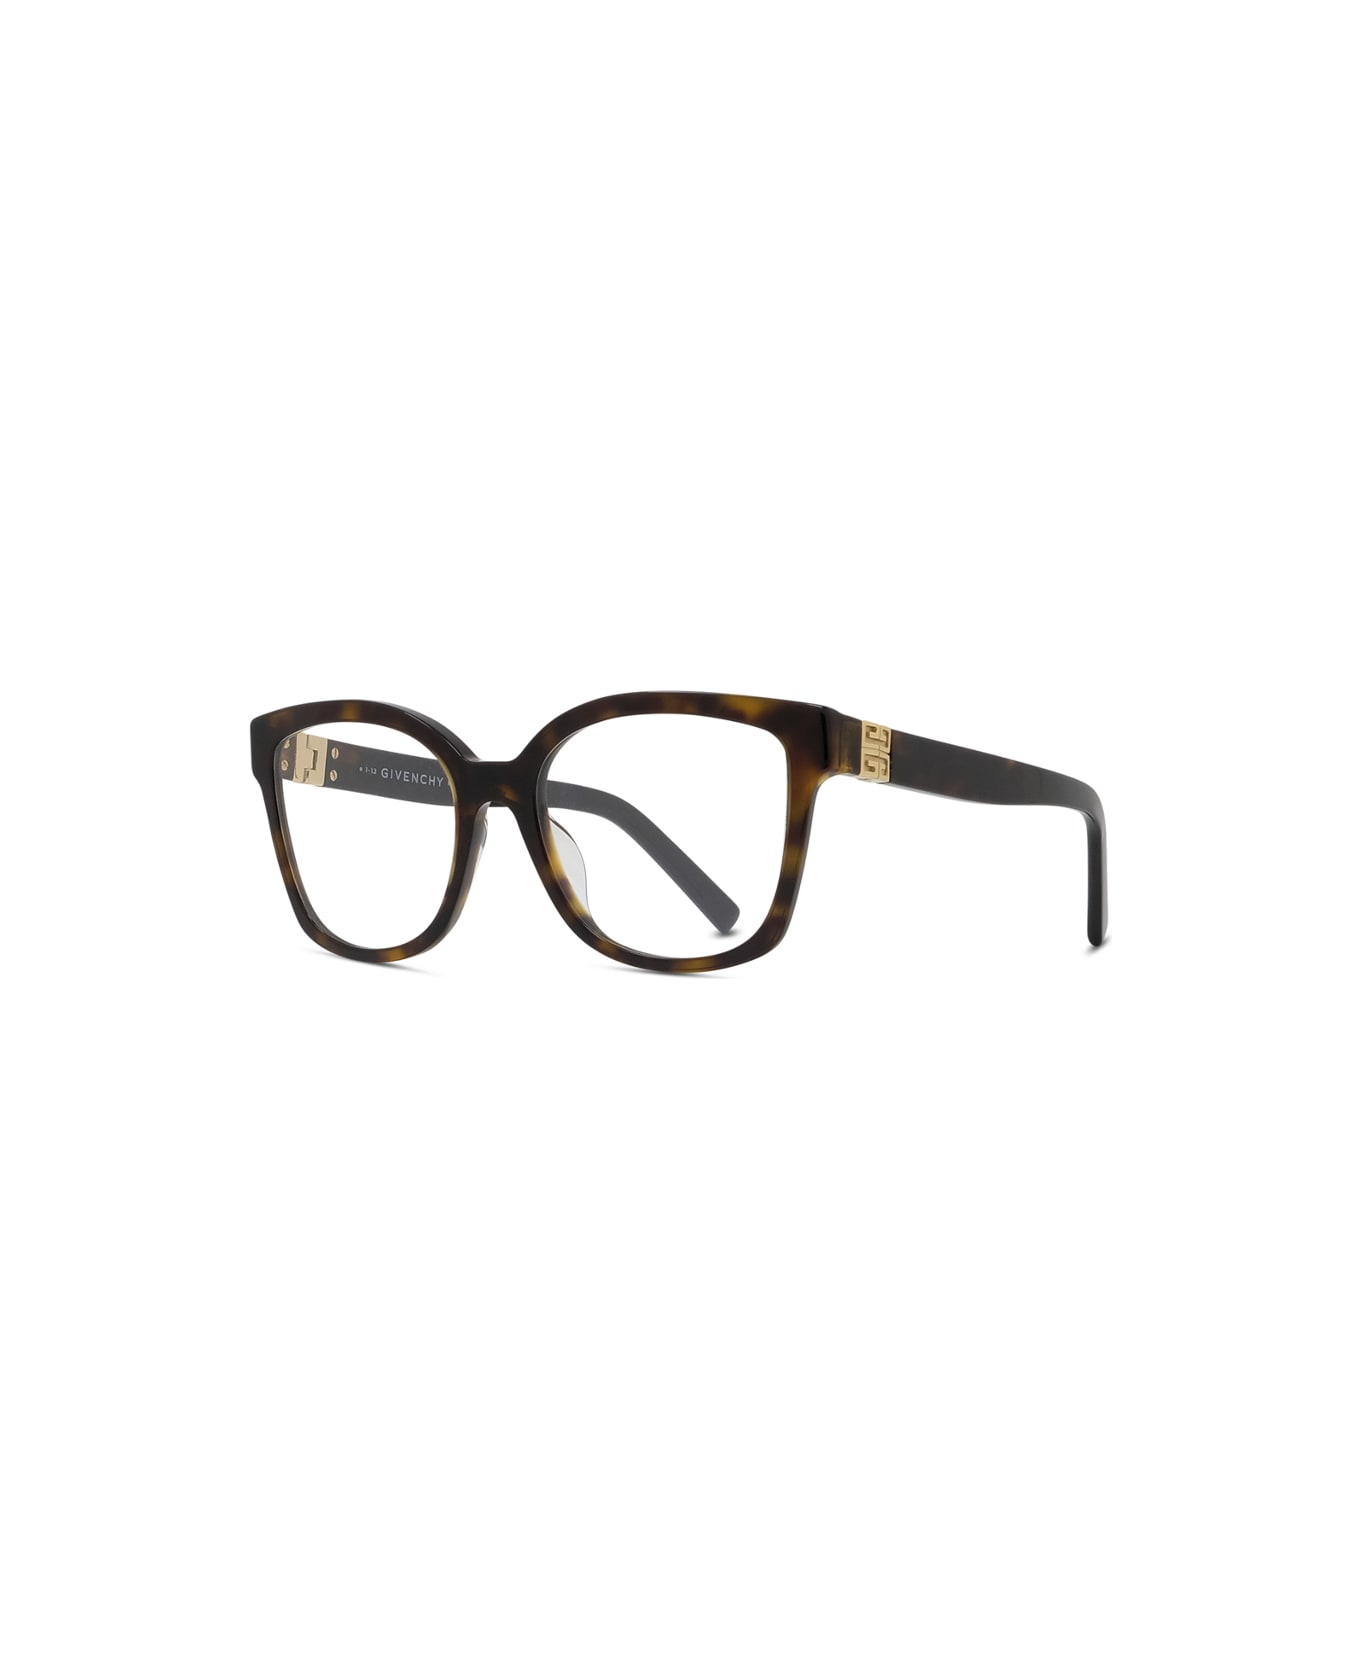 Givenchy Eyewear Gv50016i 052 Glasses - Tartarugato